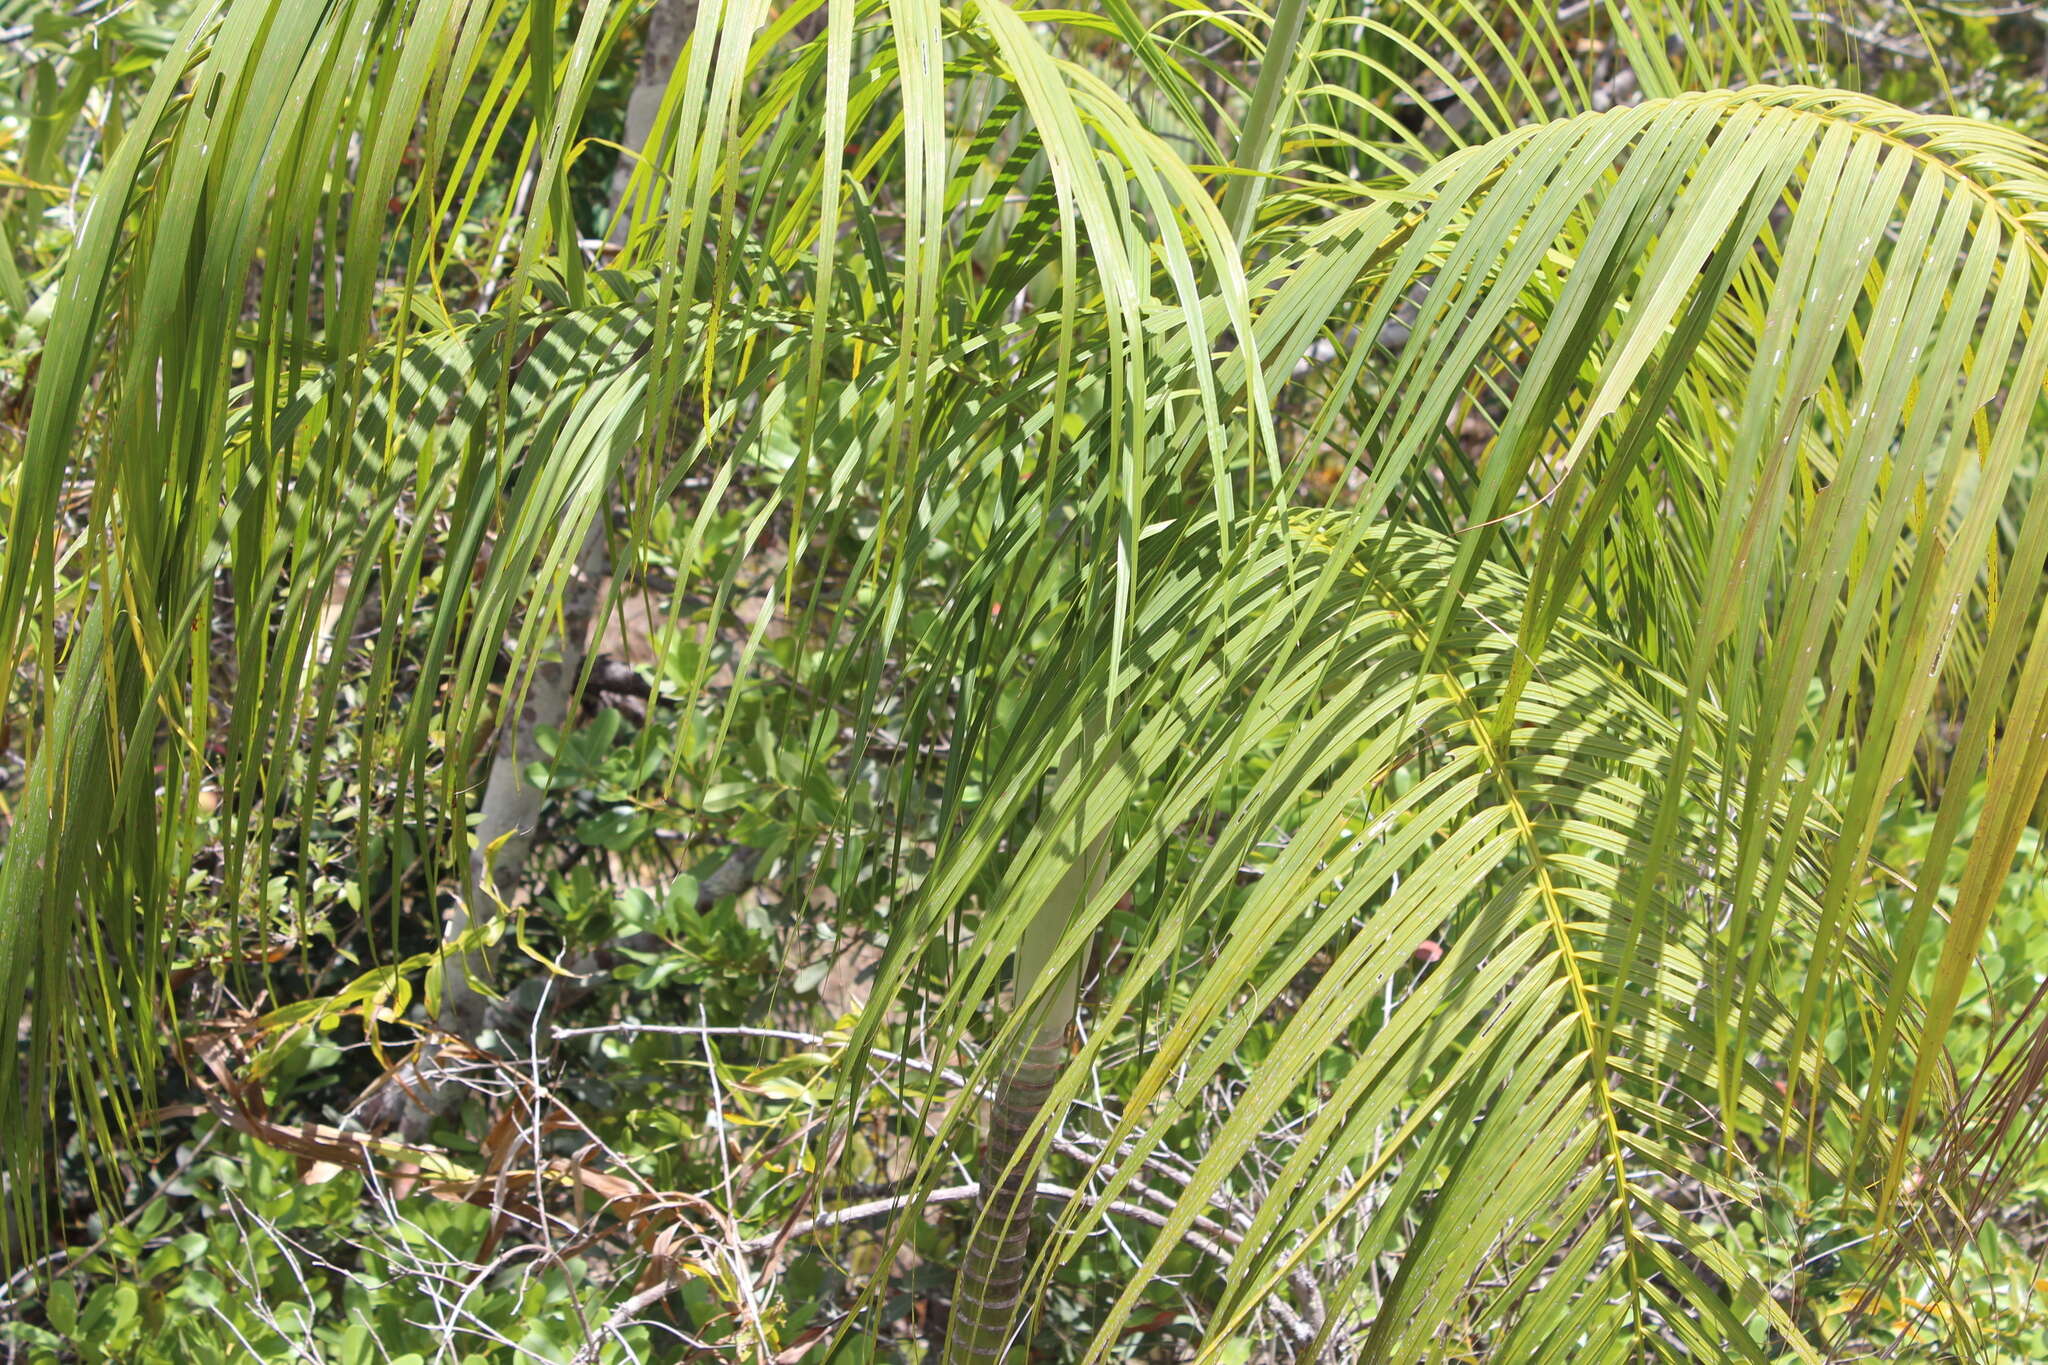 Image of Onilahy palm